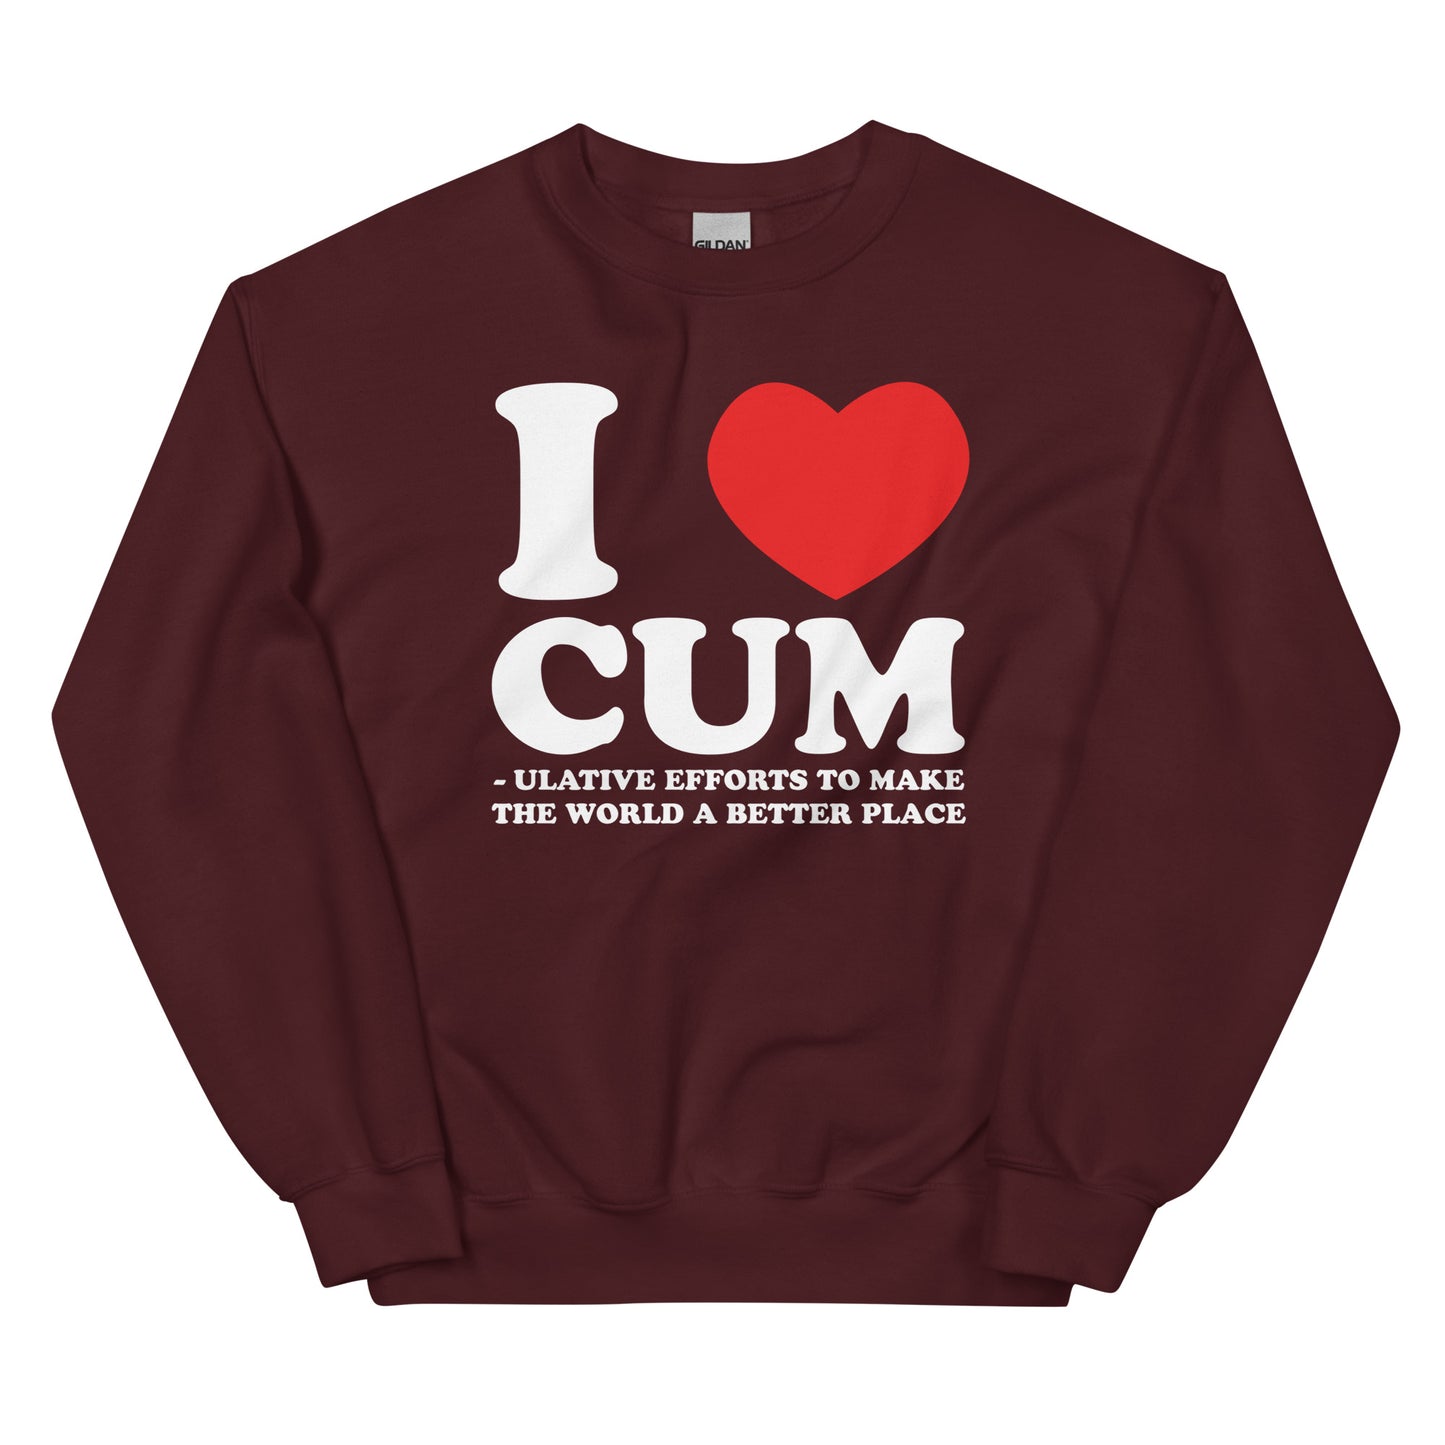 I Heart Cum(ulative Efforts) Unisex Sweatshirt